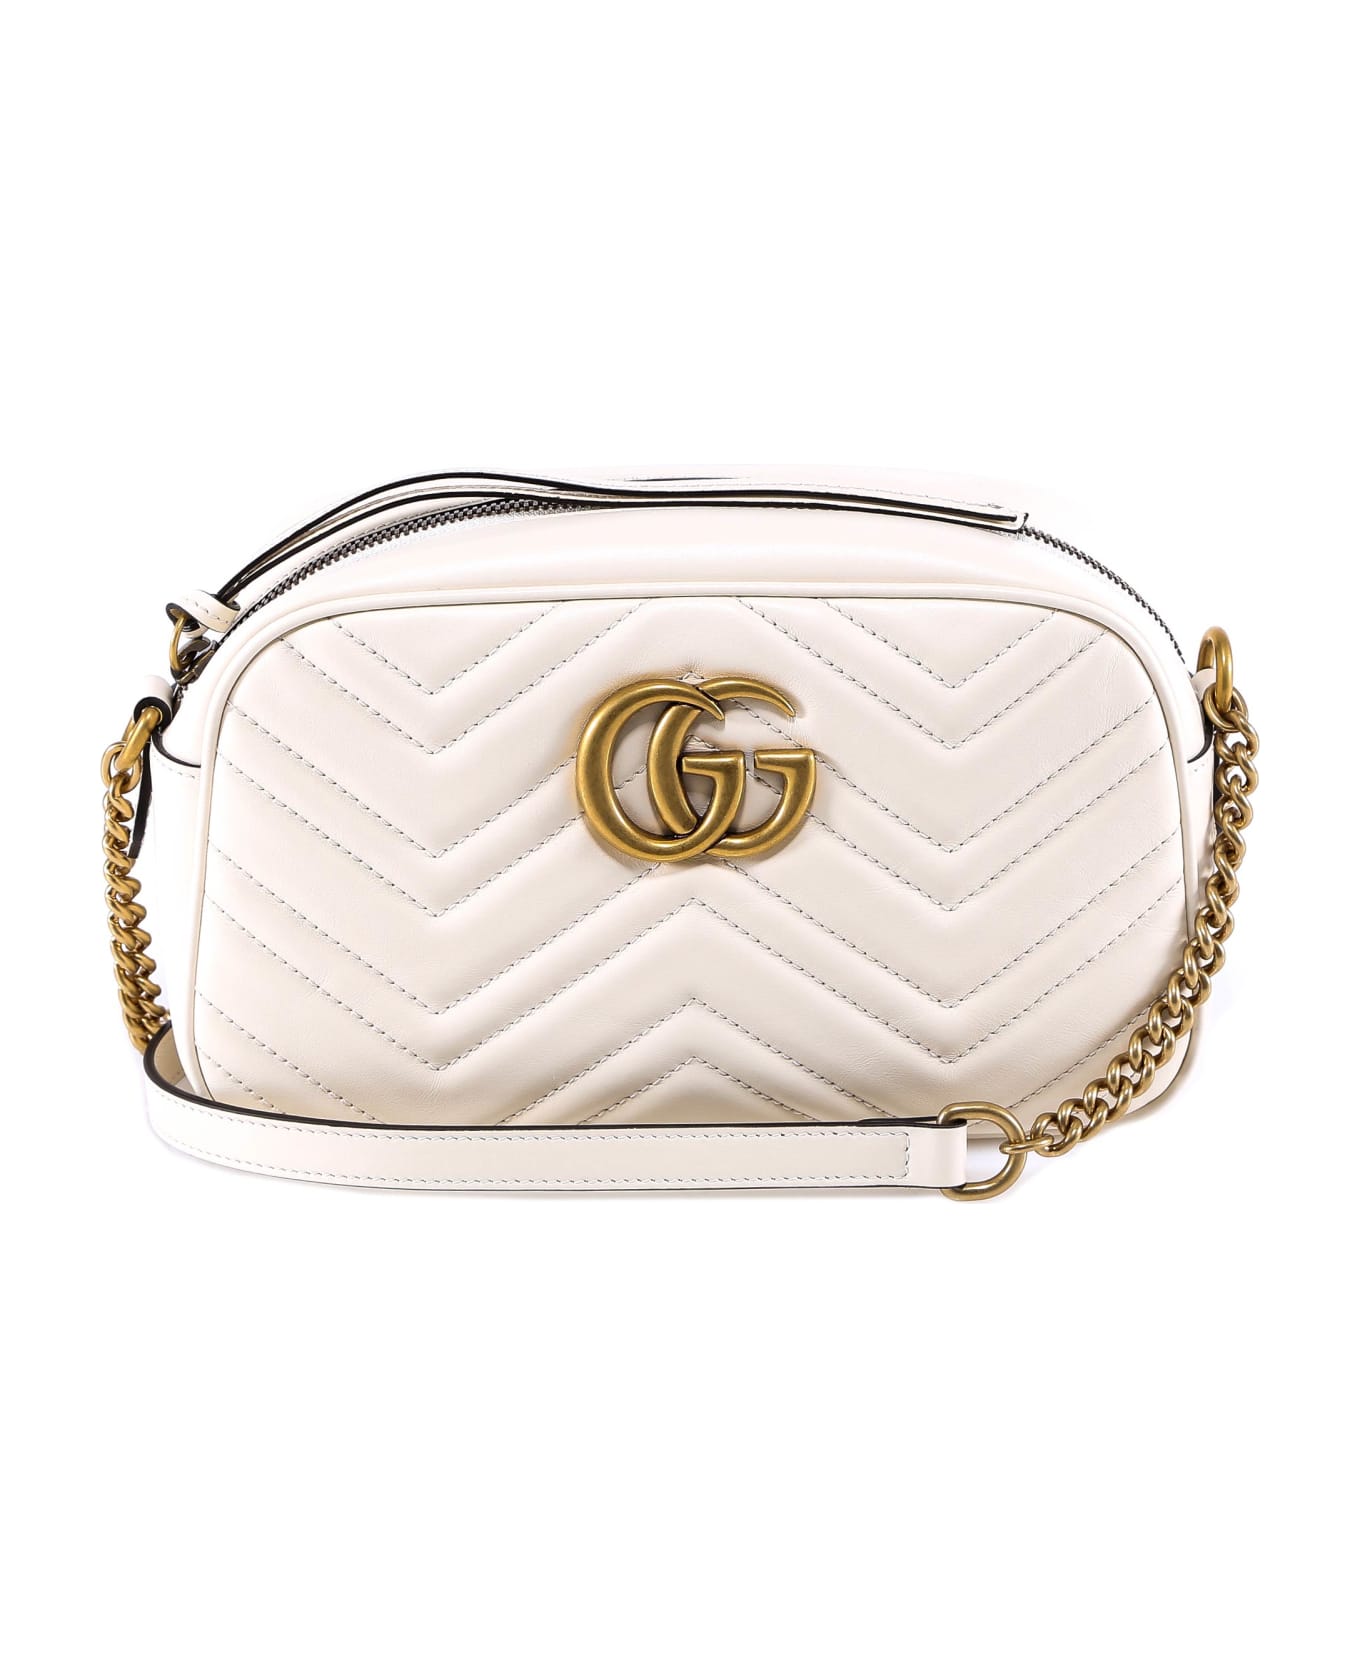 Gucci Gg Marmont Shoulder Bag - White